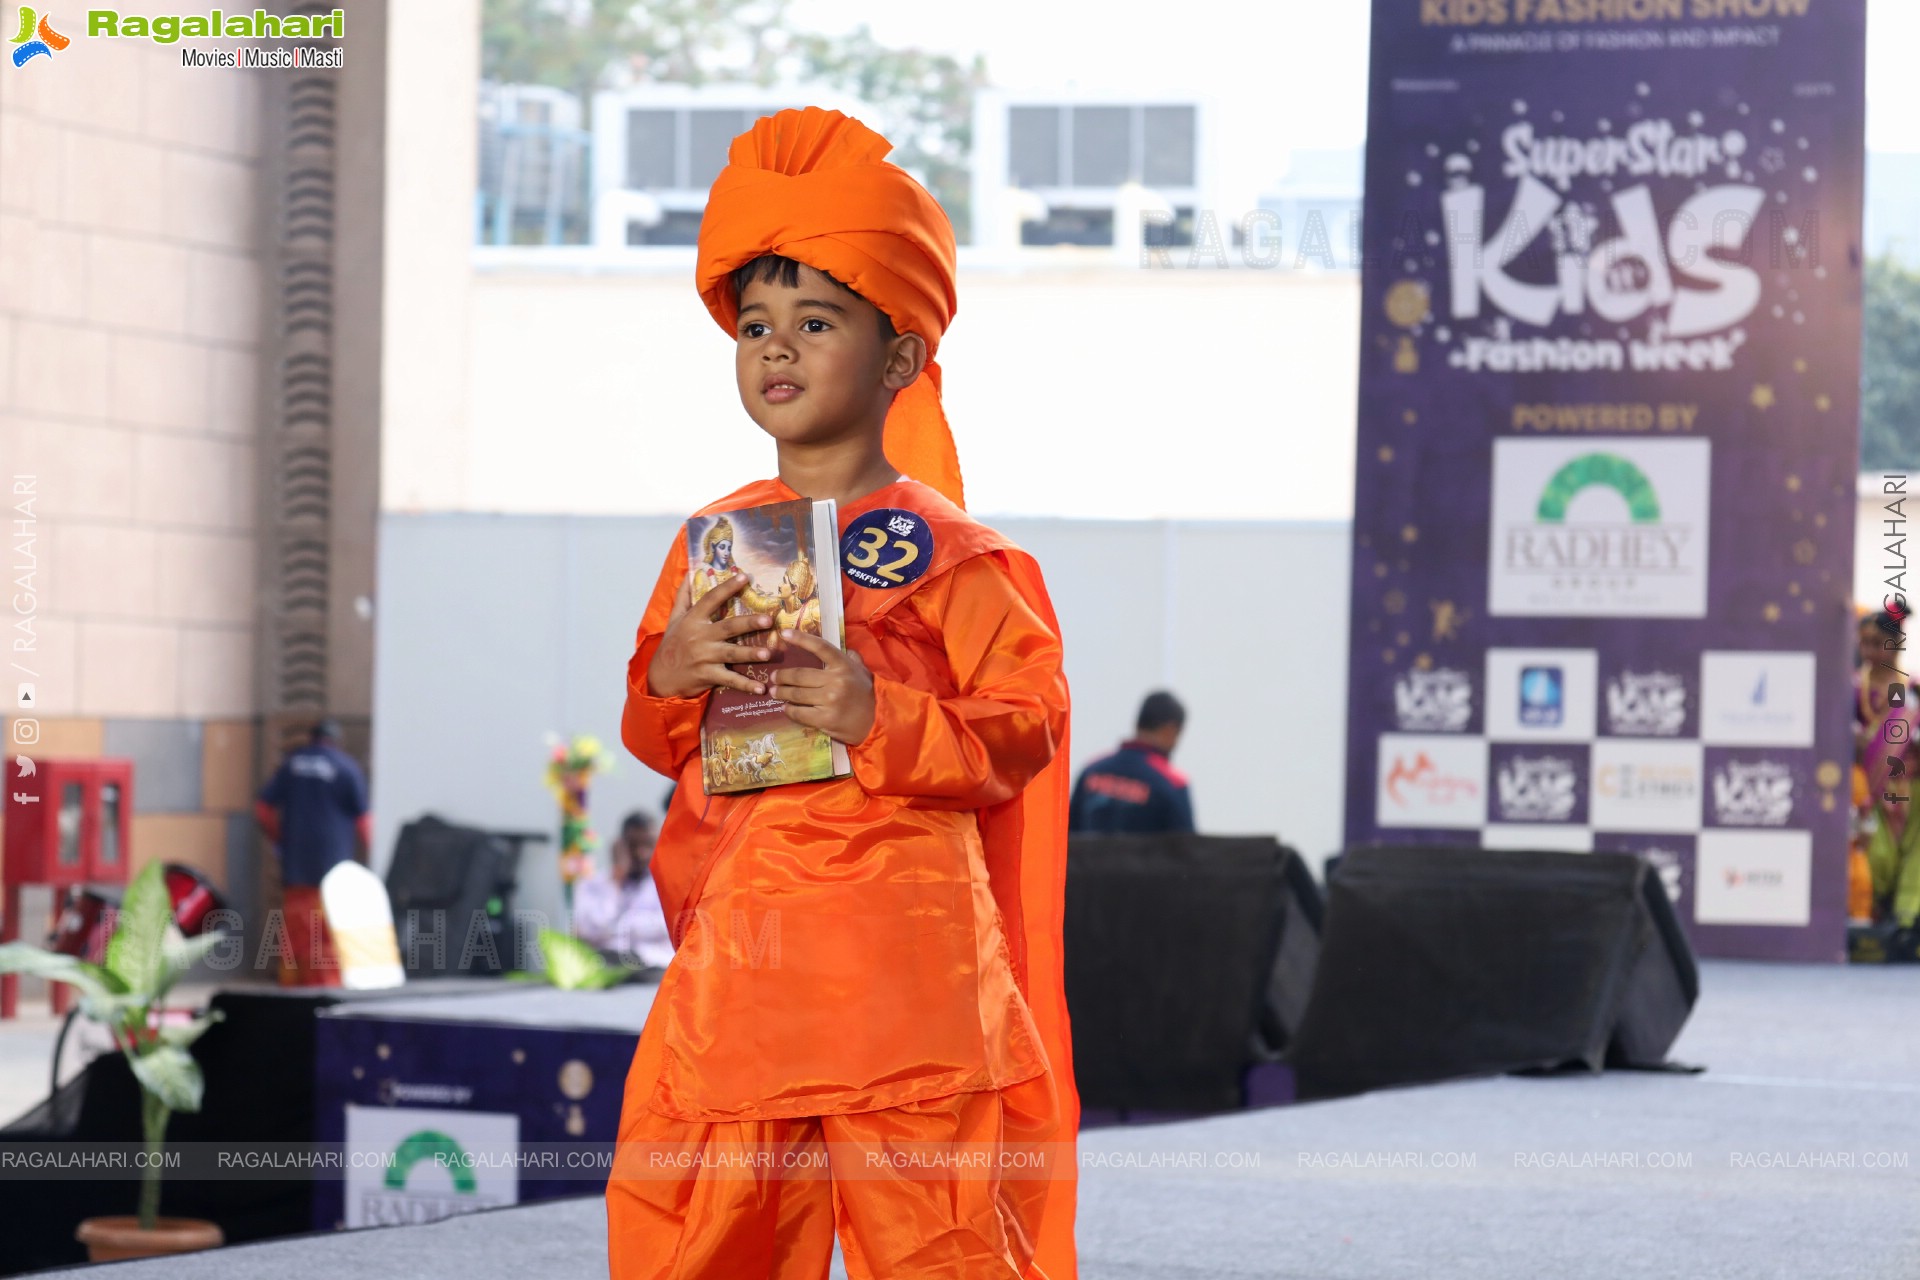 Super Star Kids Fashion Week at Hitex Exhibition Centre, Hitech City.